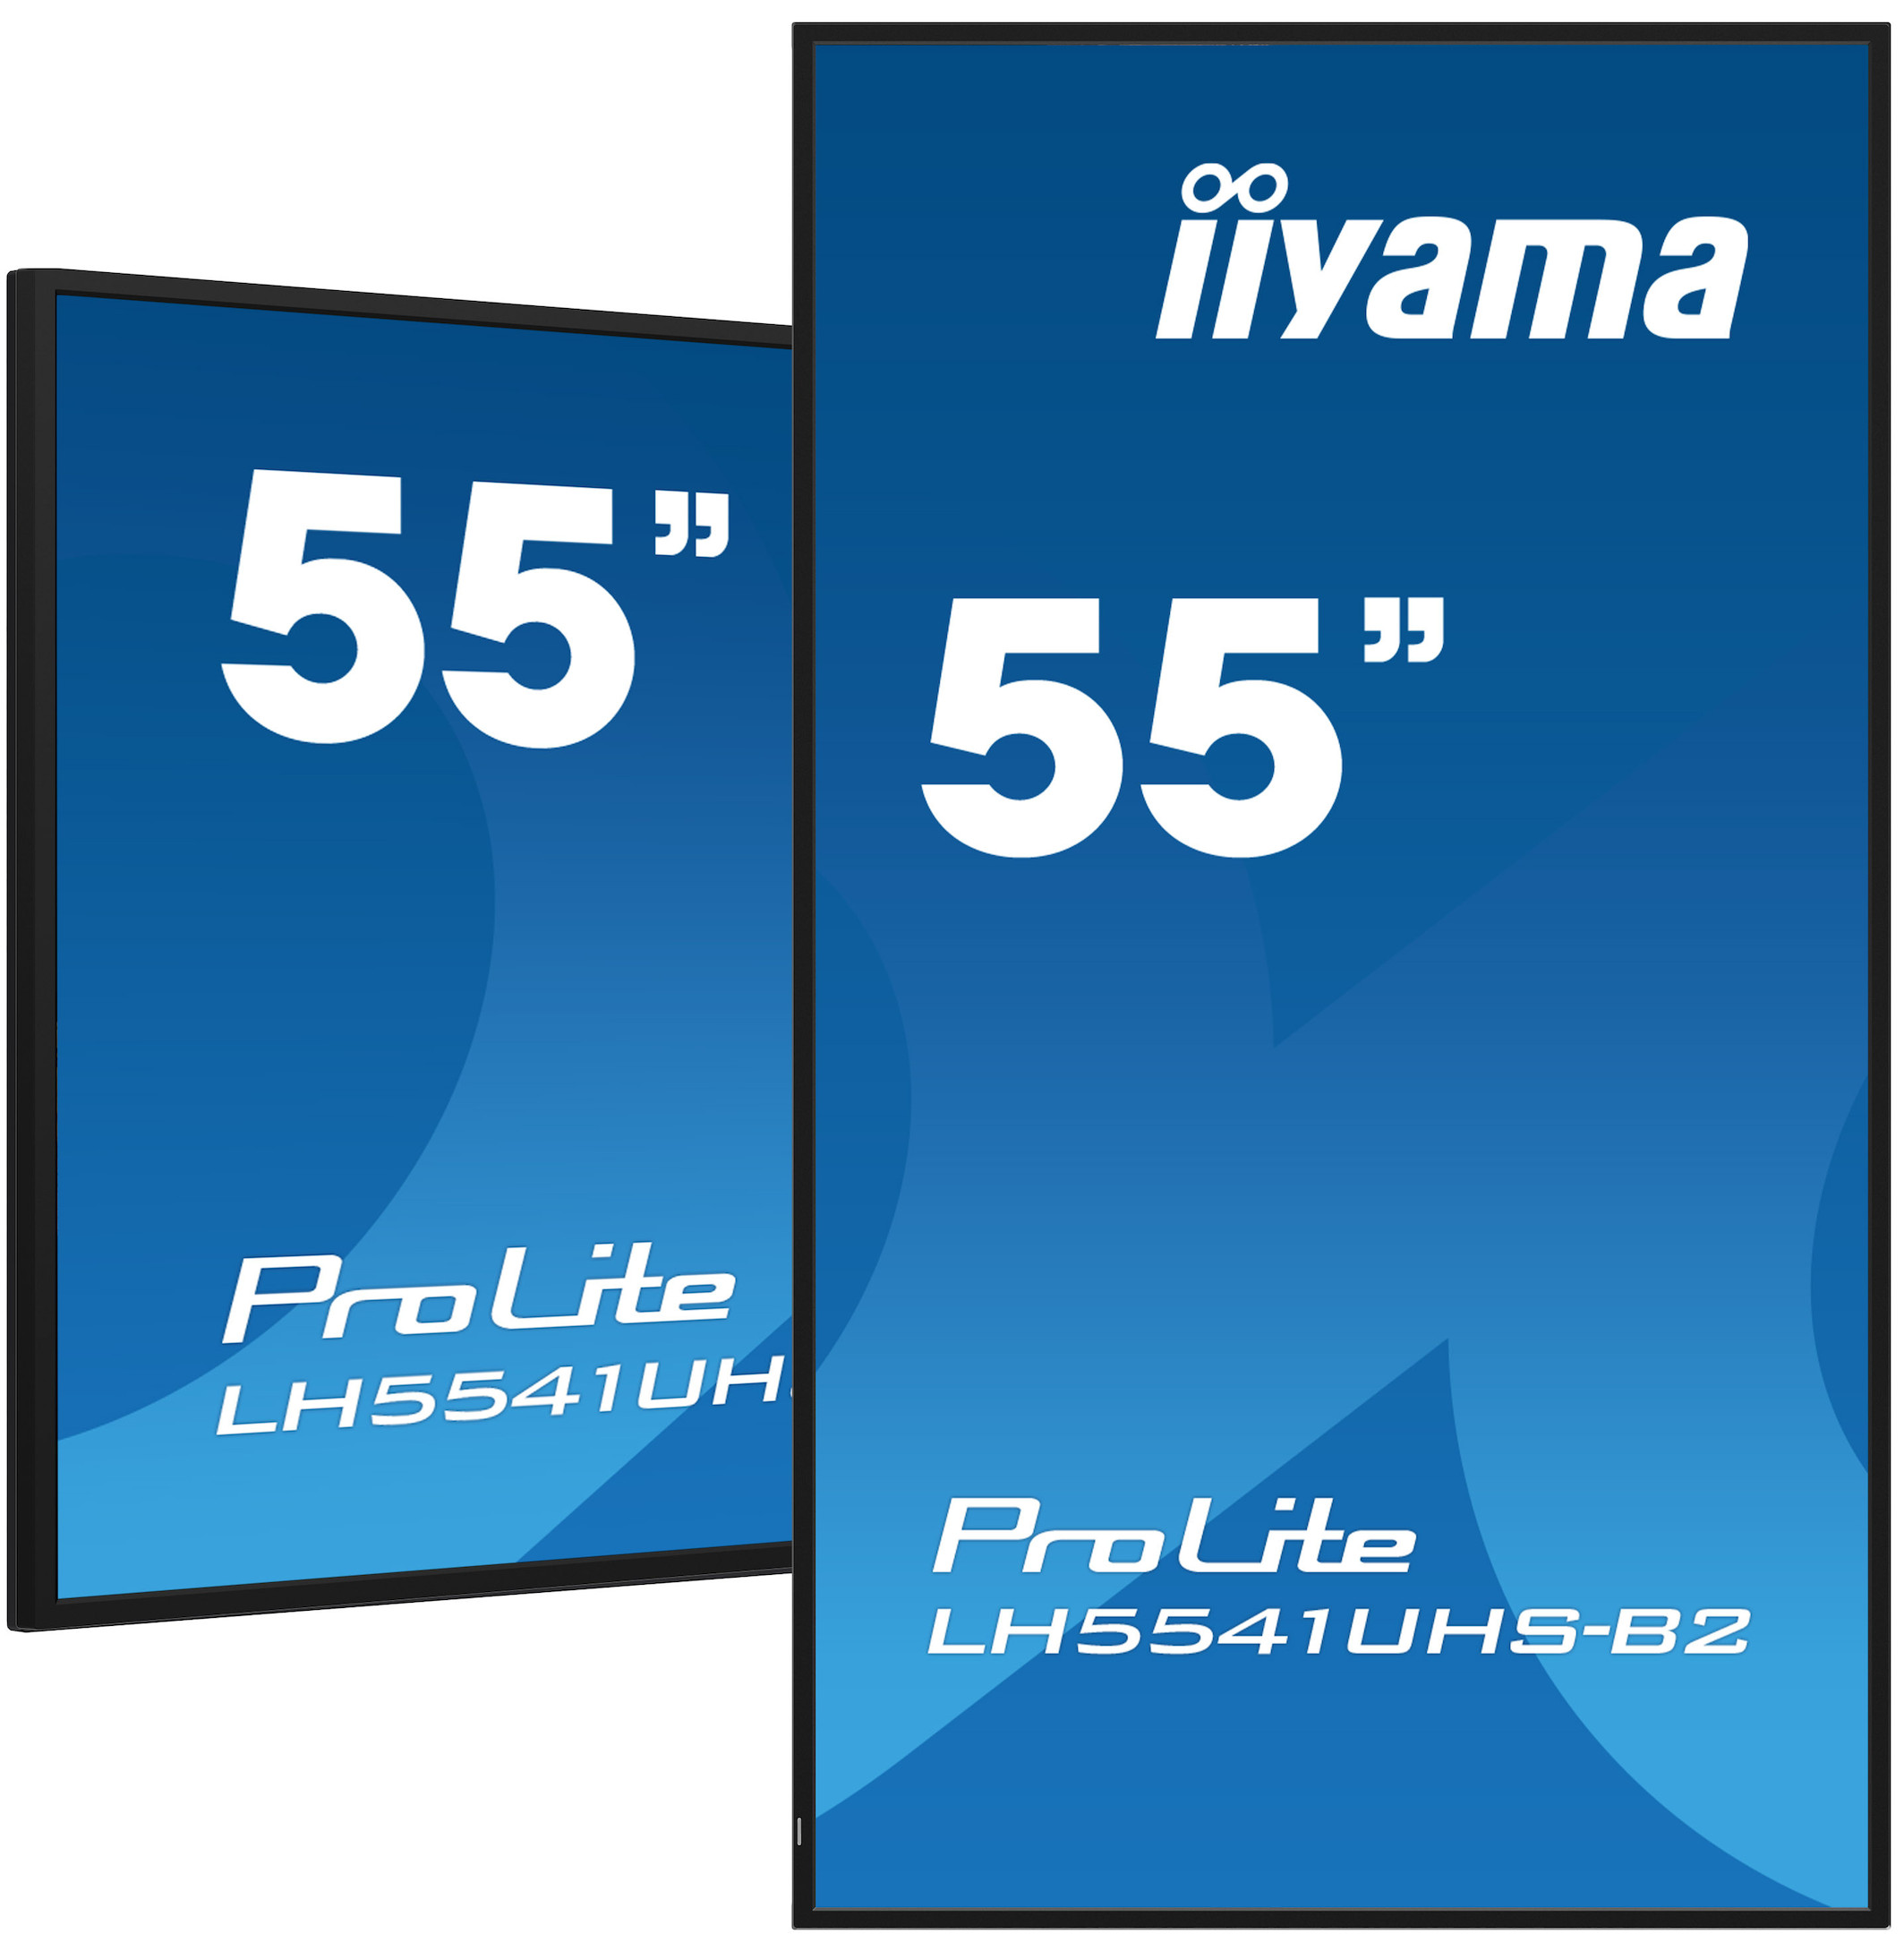 iiyama-PROLITE-LH5541UHS-B2